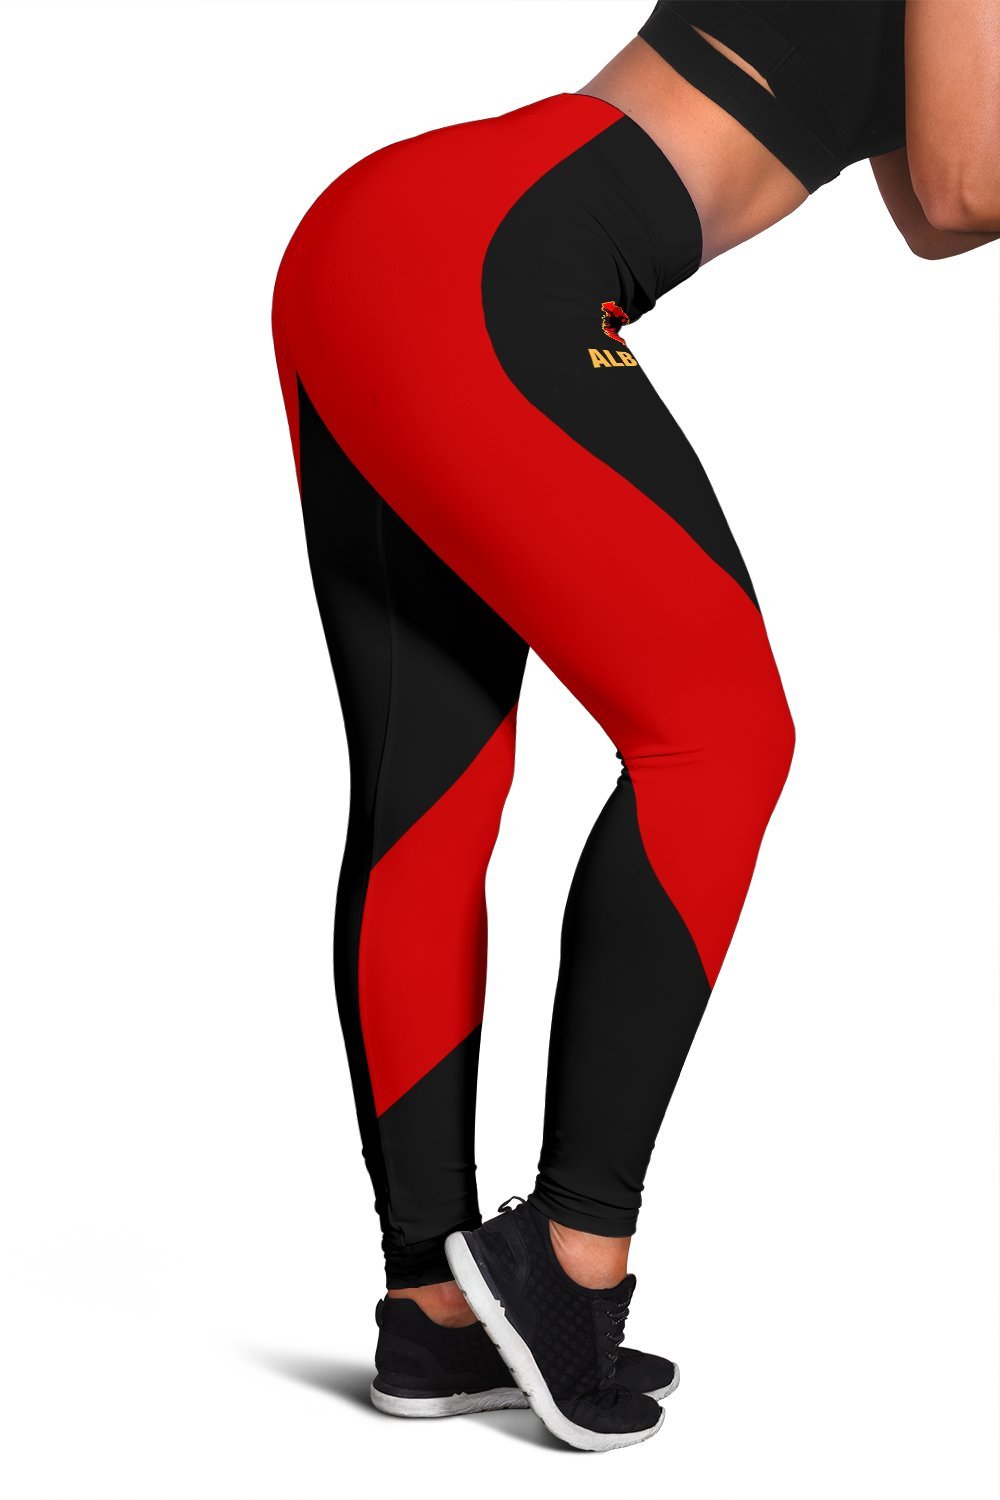 albania-womens-leggings-special-flag